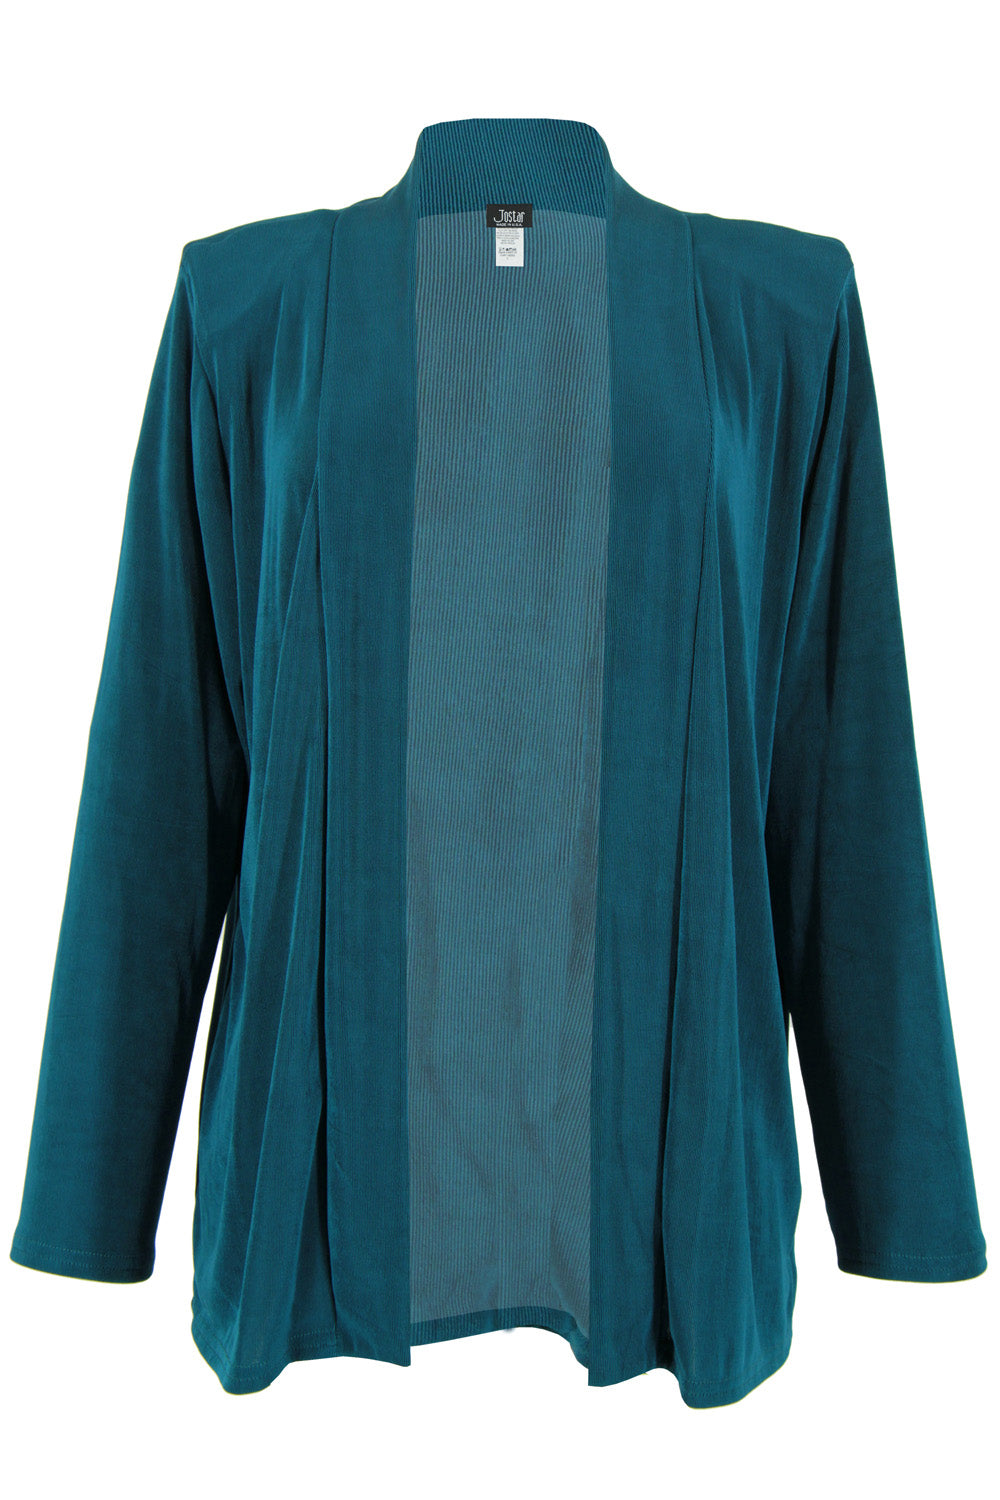 Jostar Women's Non Iron Drape Jacket Long Sleeve, 400AY-L - Jostar Online